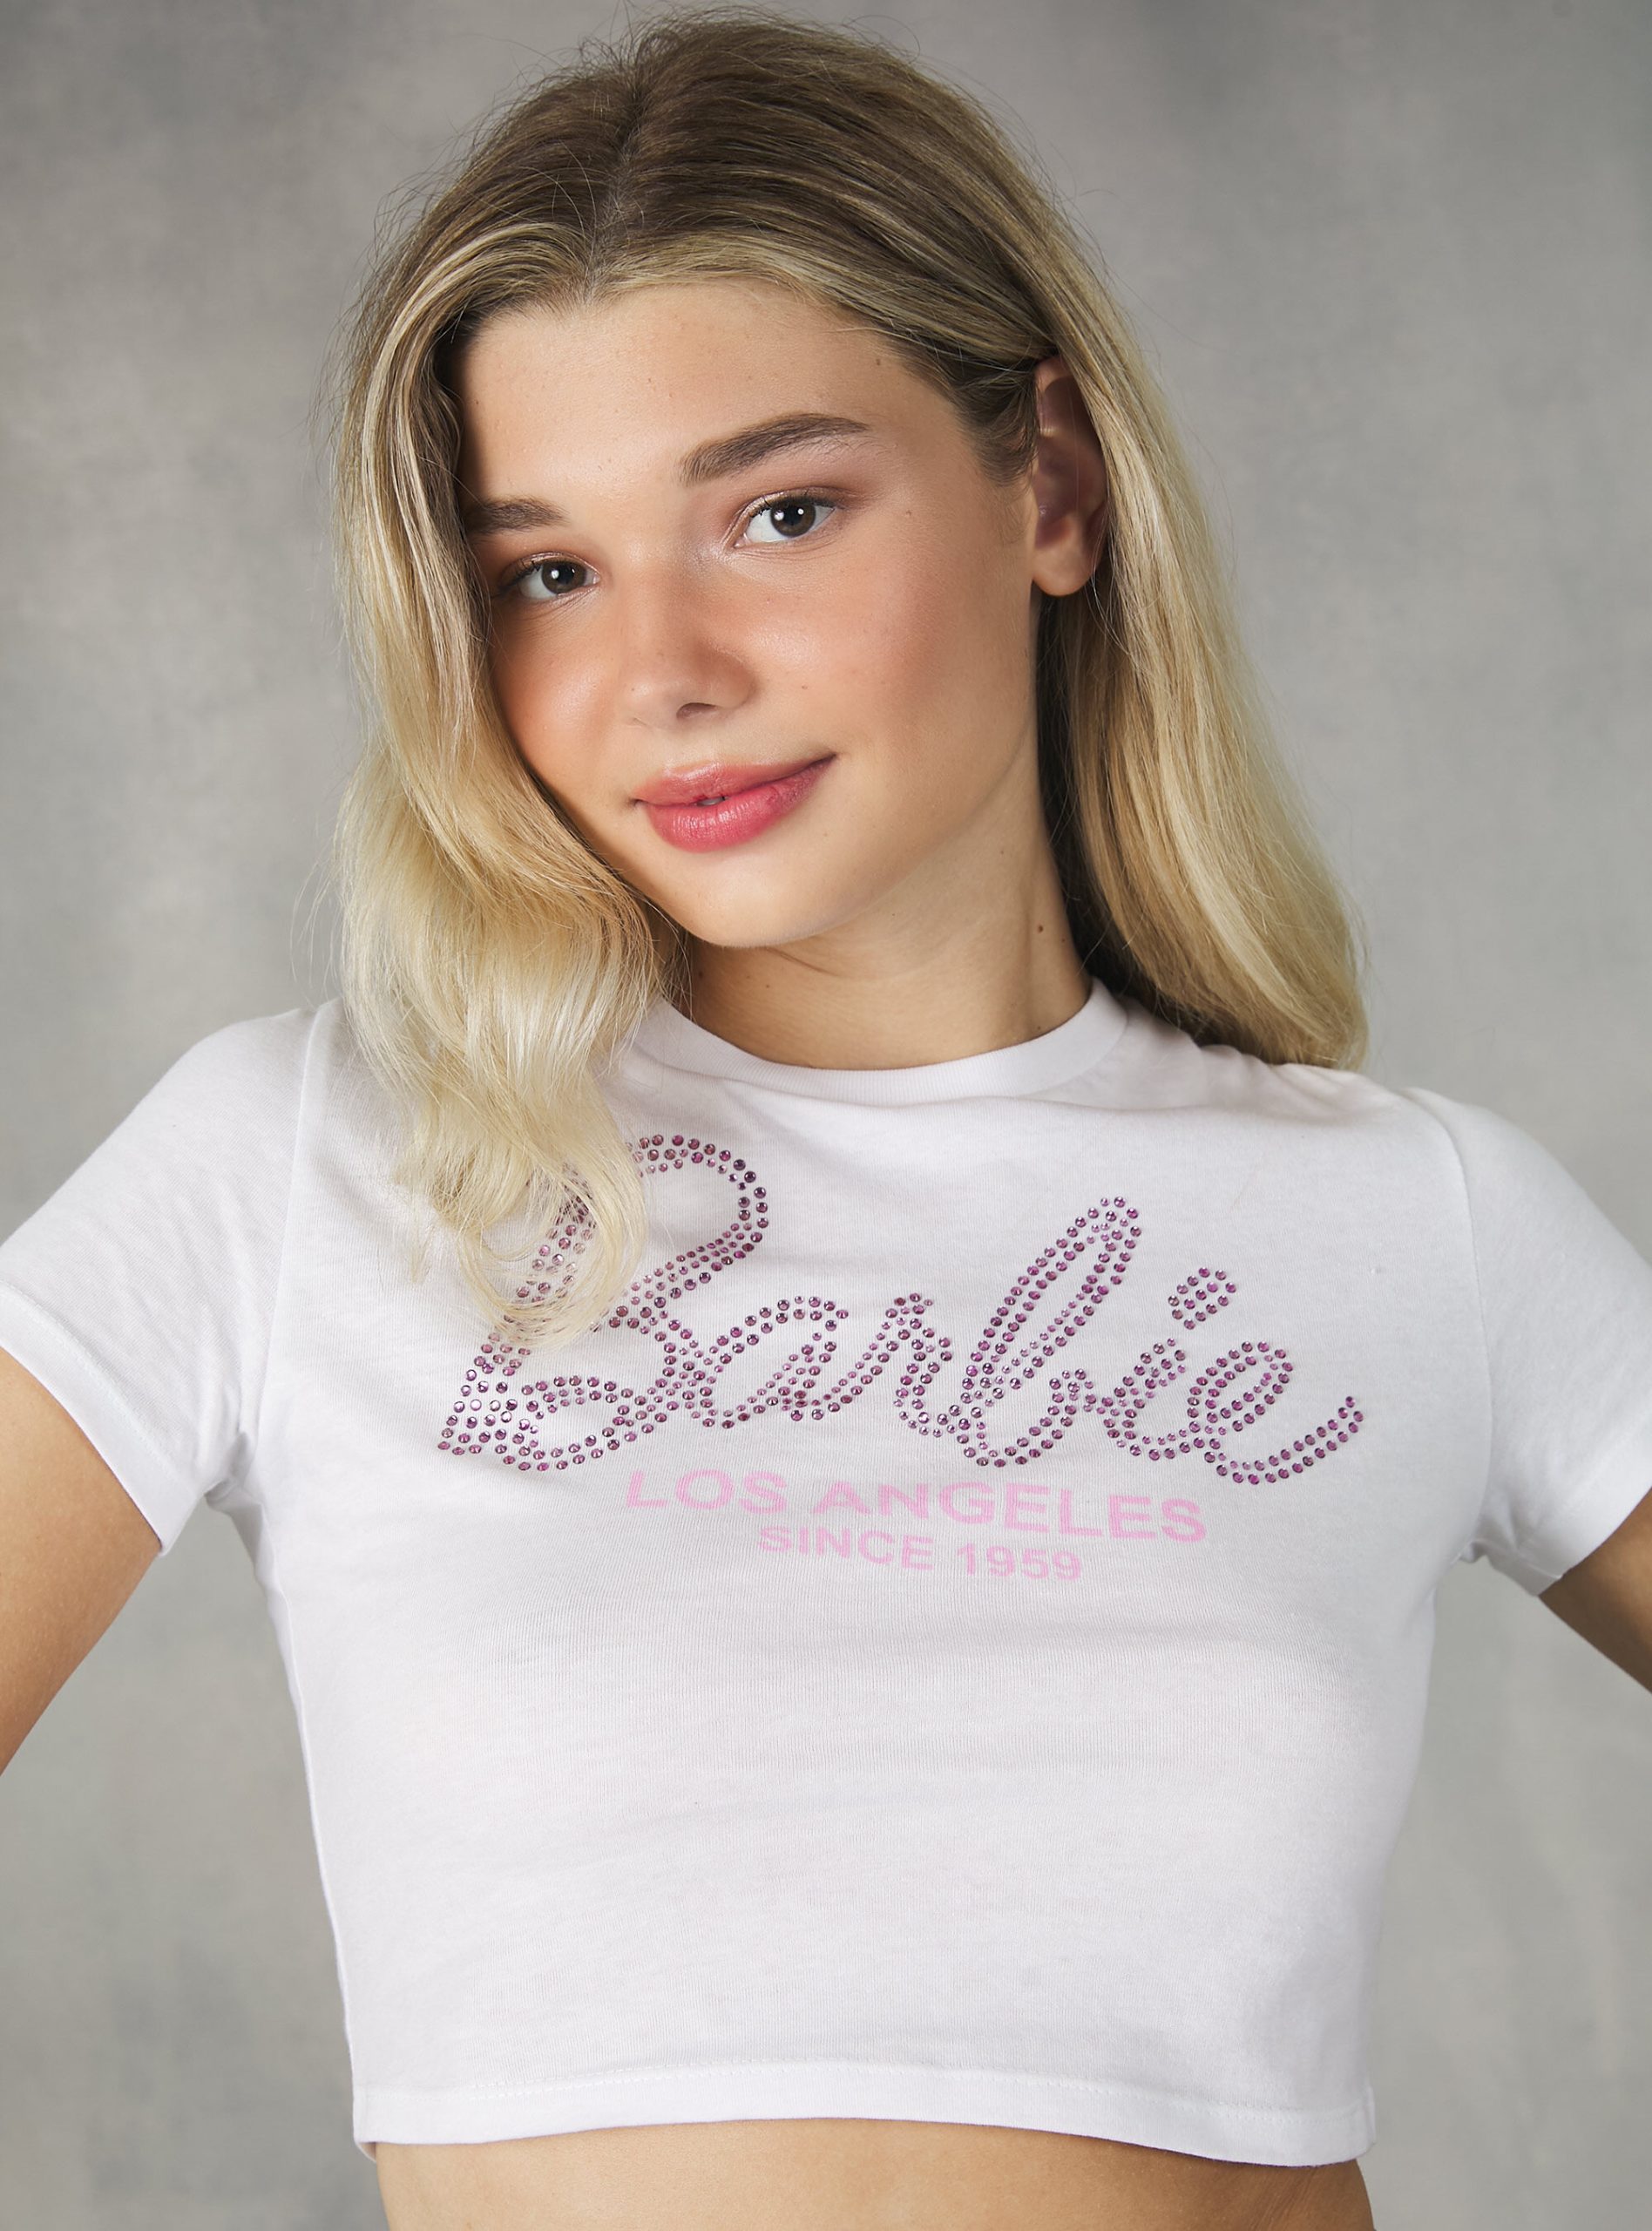 Reduzierter Preis Barbie / Alcott T-Shirt Frauen T-Shirt Wh3 White – 1